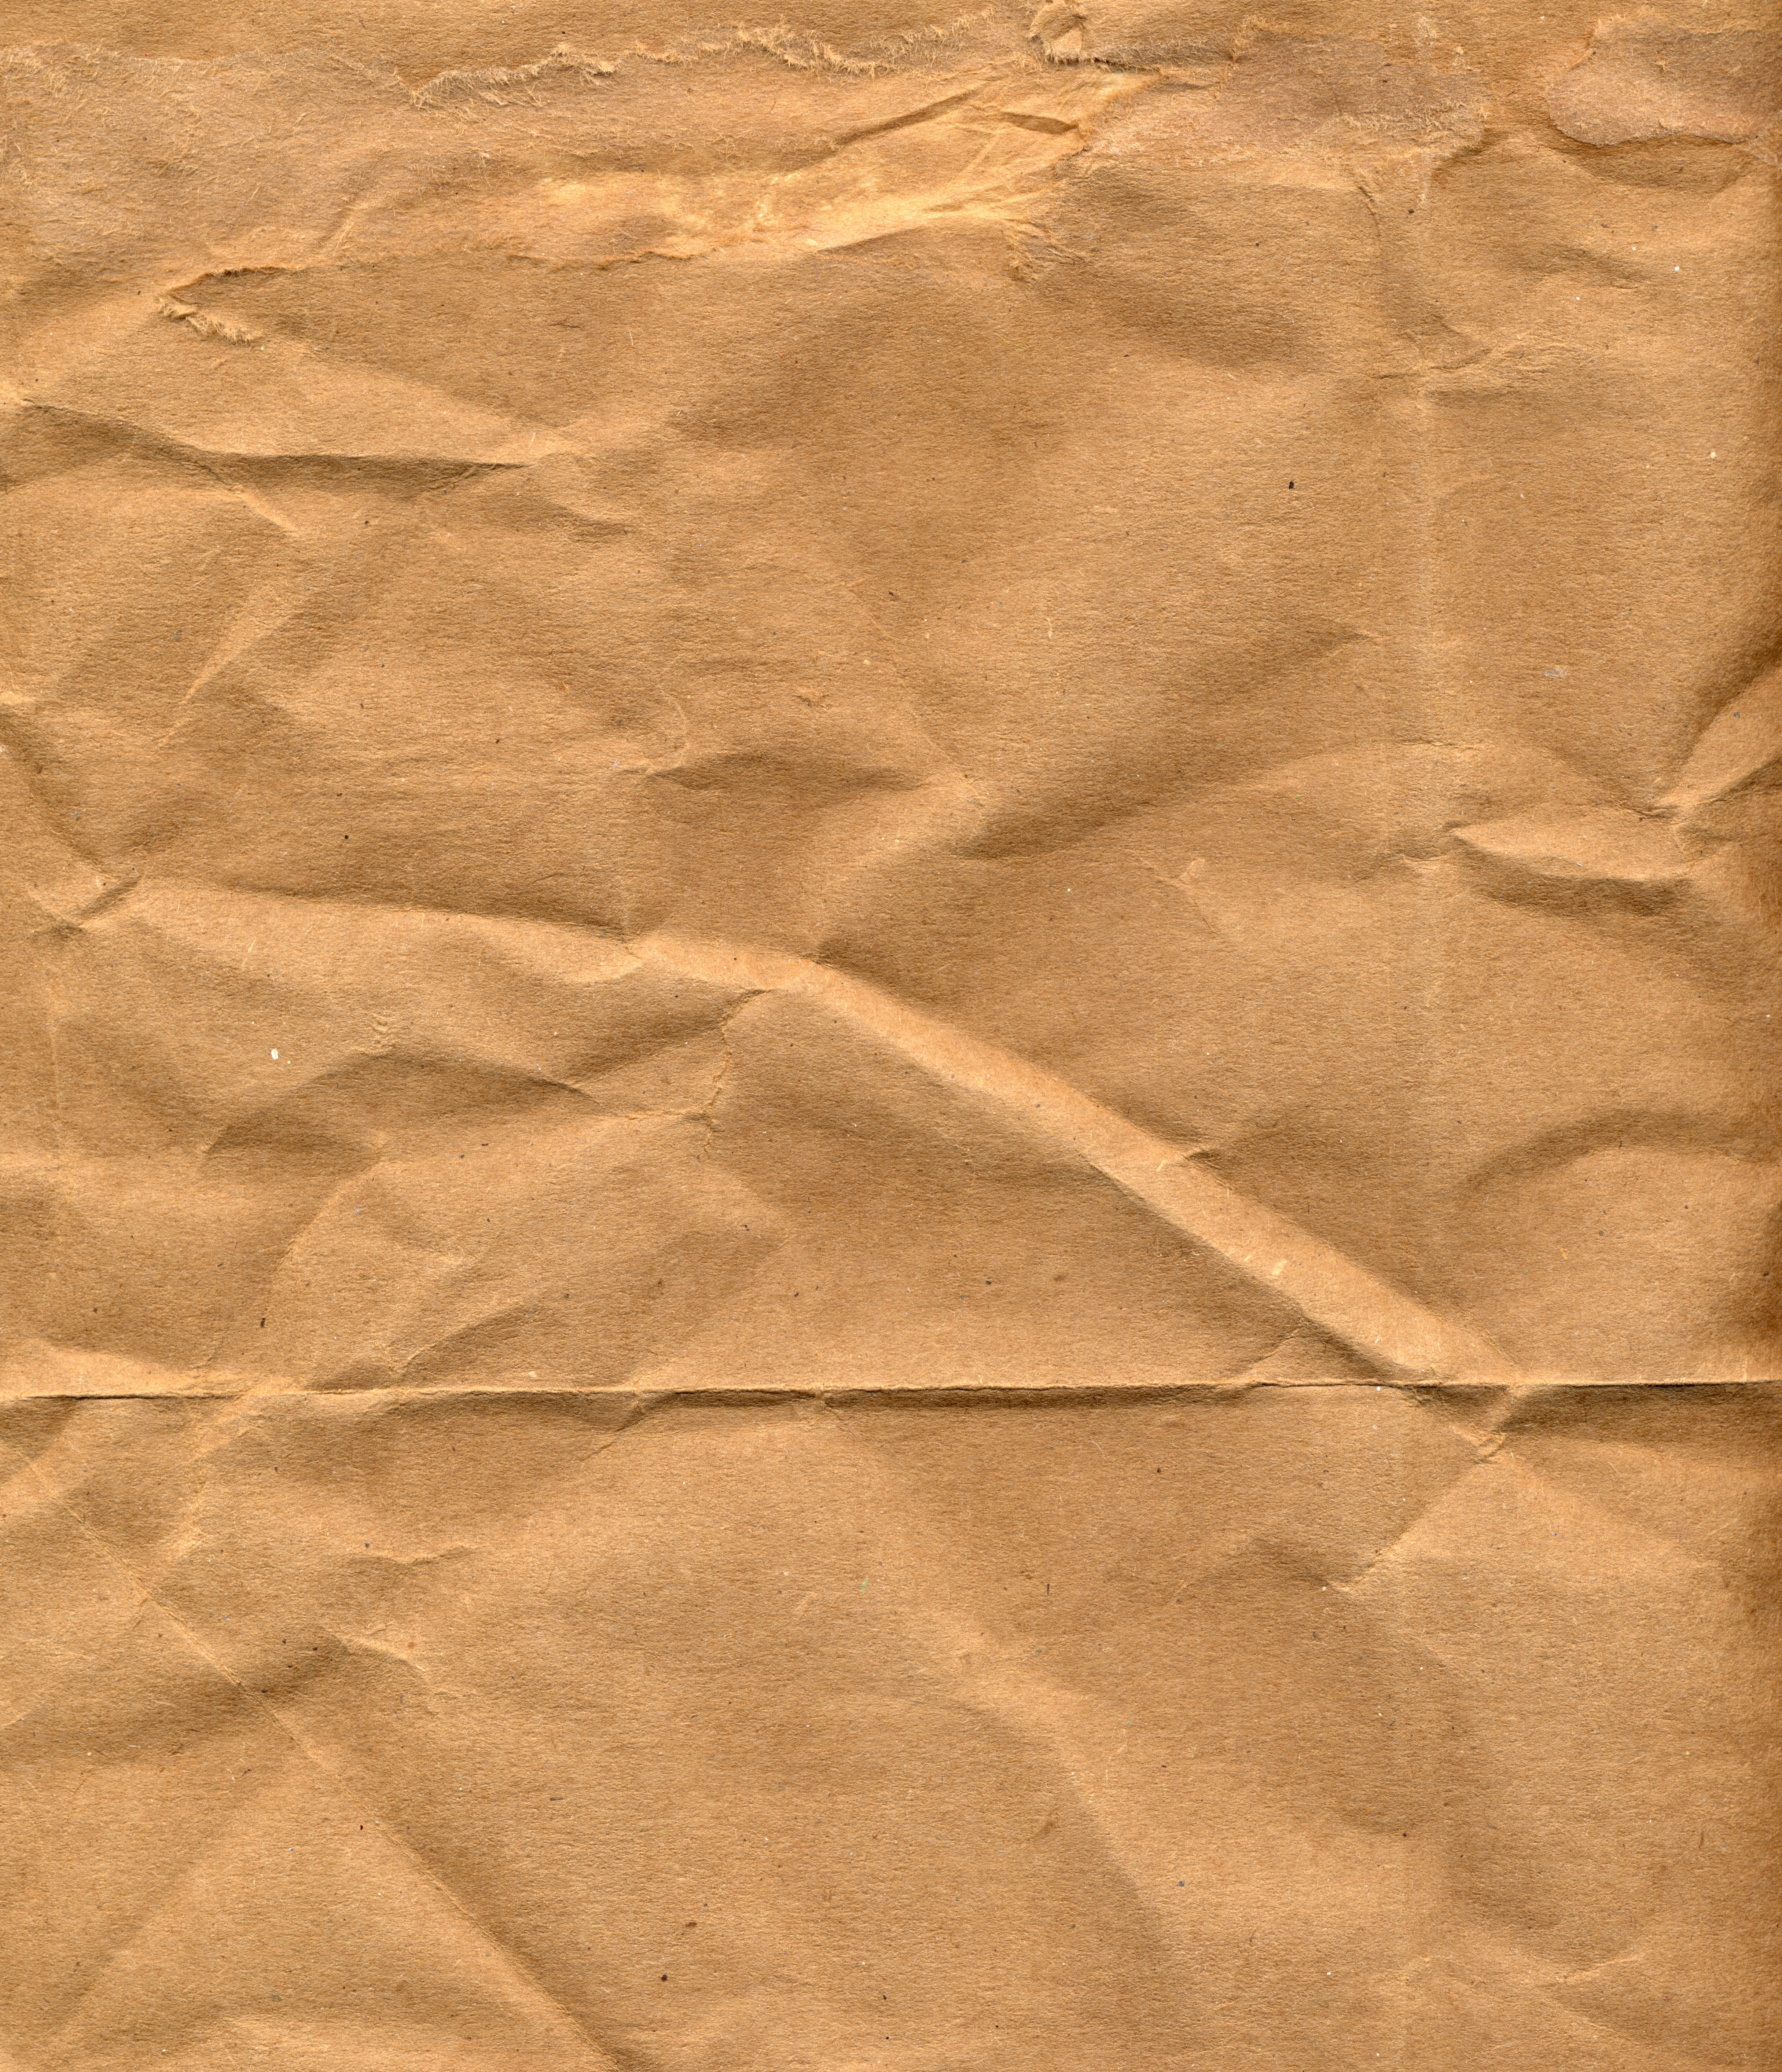 File:Brown paper bag texture.jpg - Wikimedia Commons